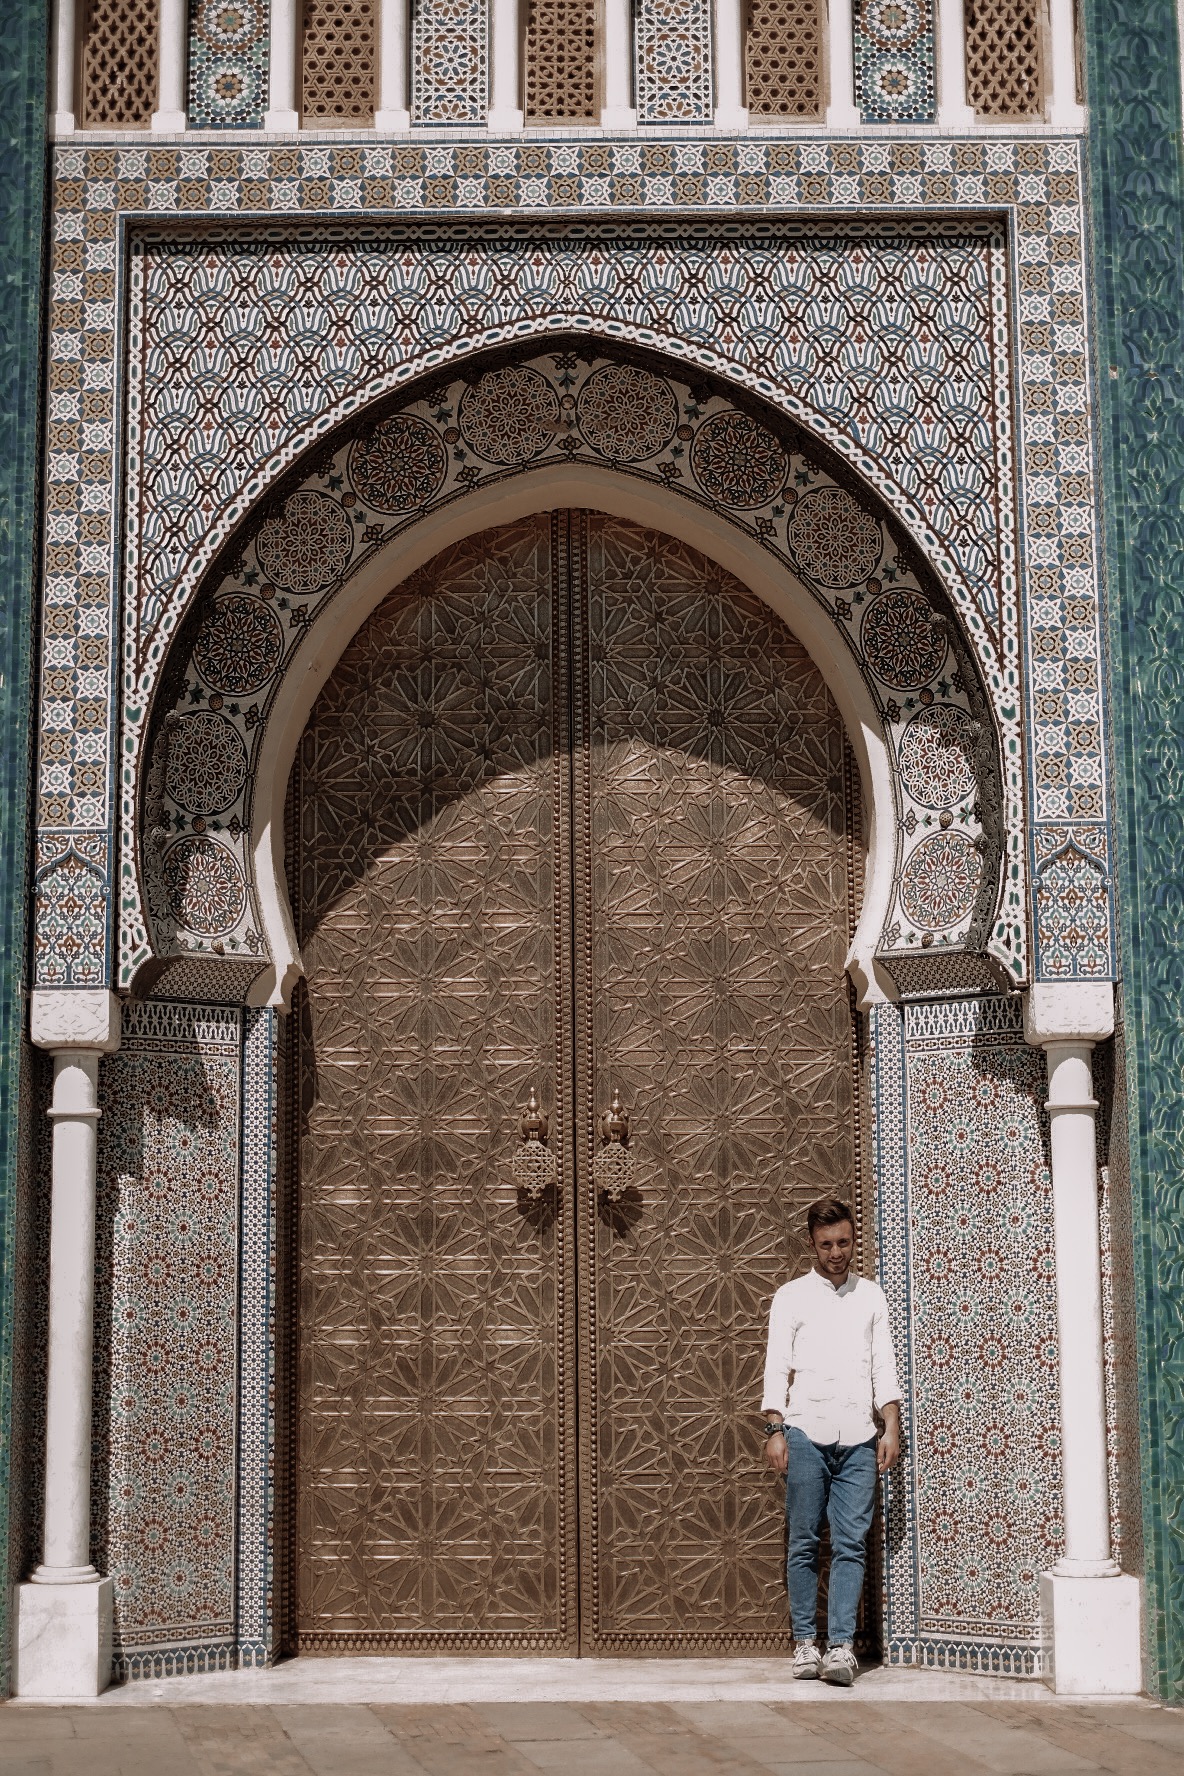 Royal Palace, Morocco...